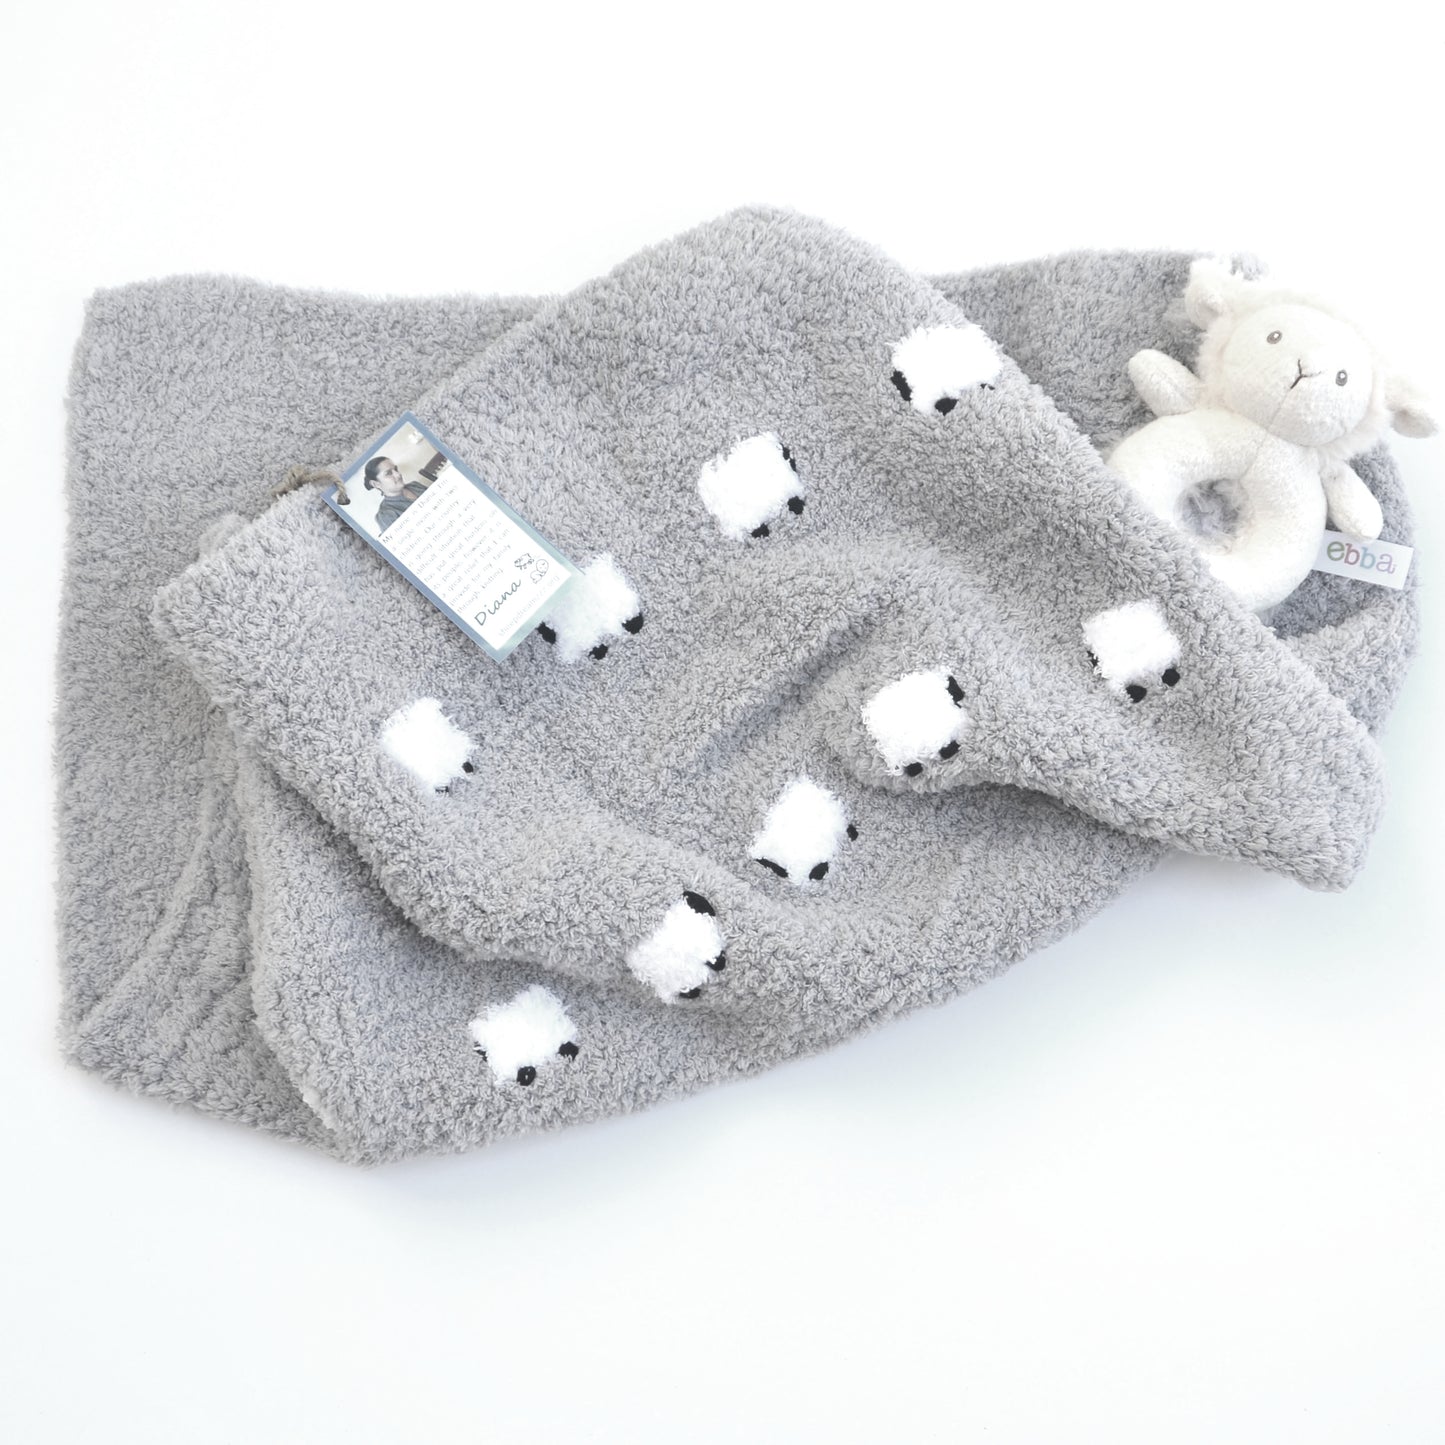 Light gray sherpa-type baby blanket